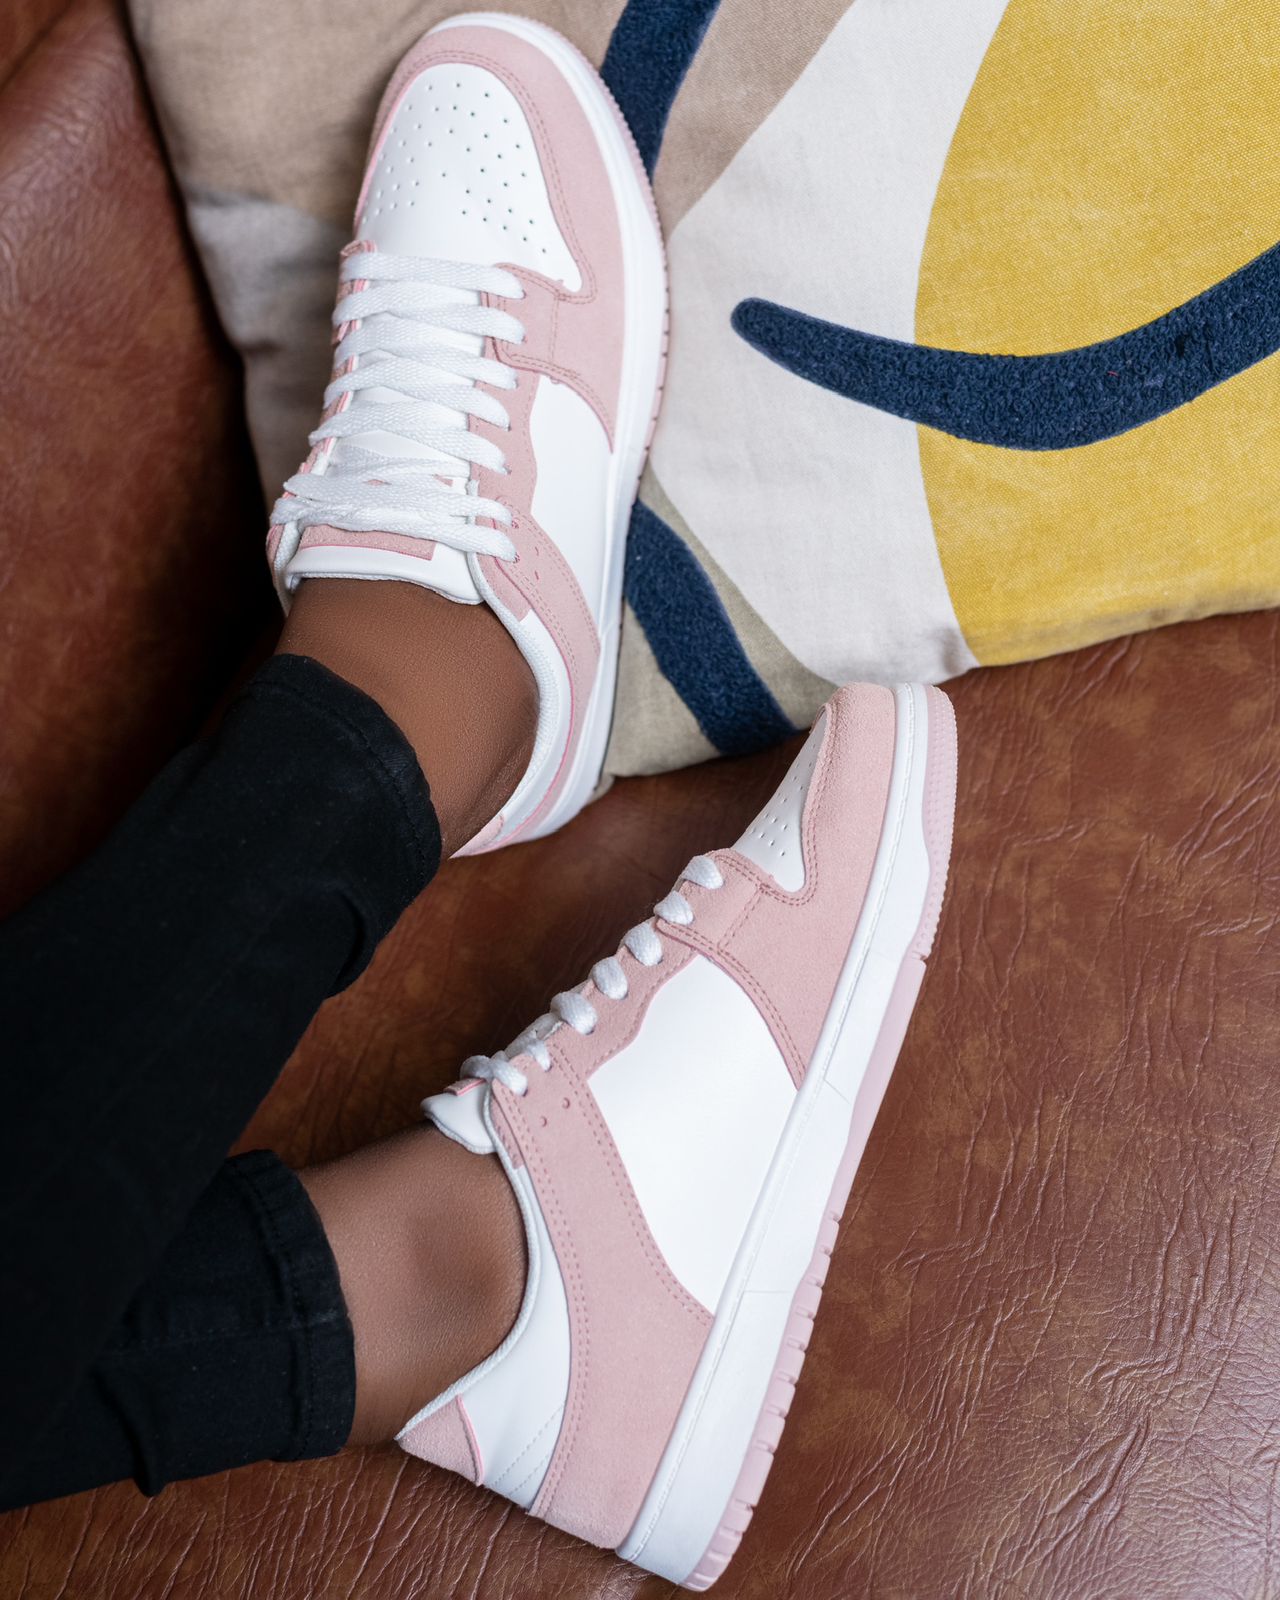 Urban Sneaker (Pink) - Minichic collection 